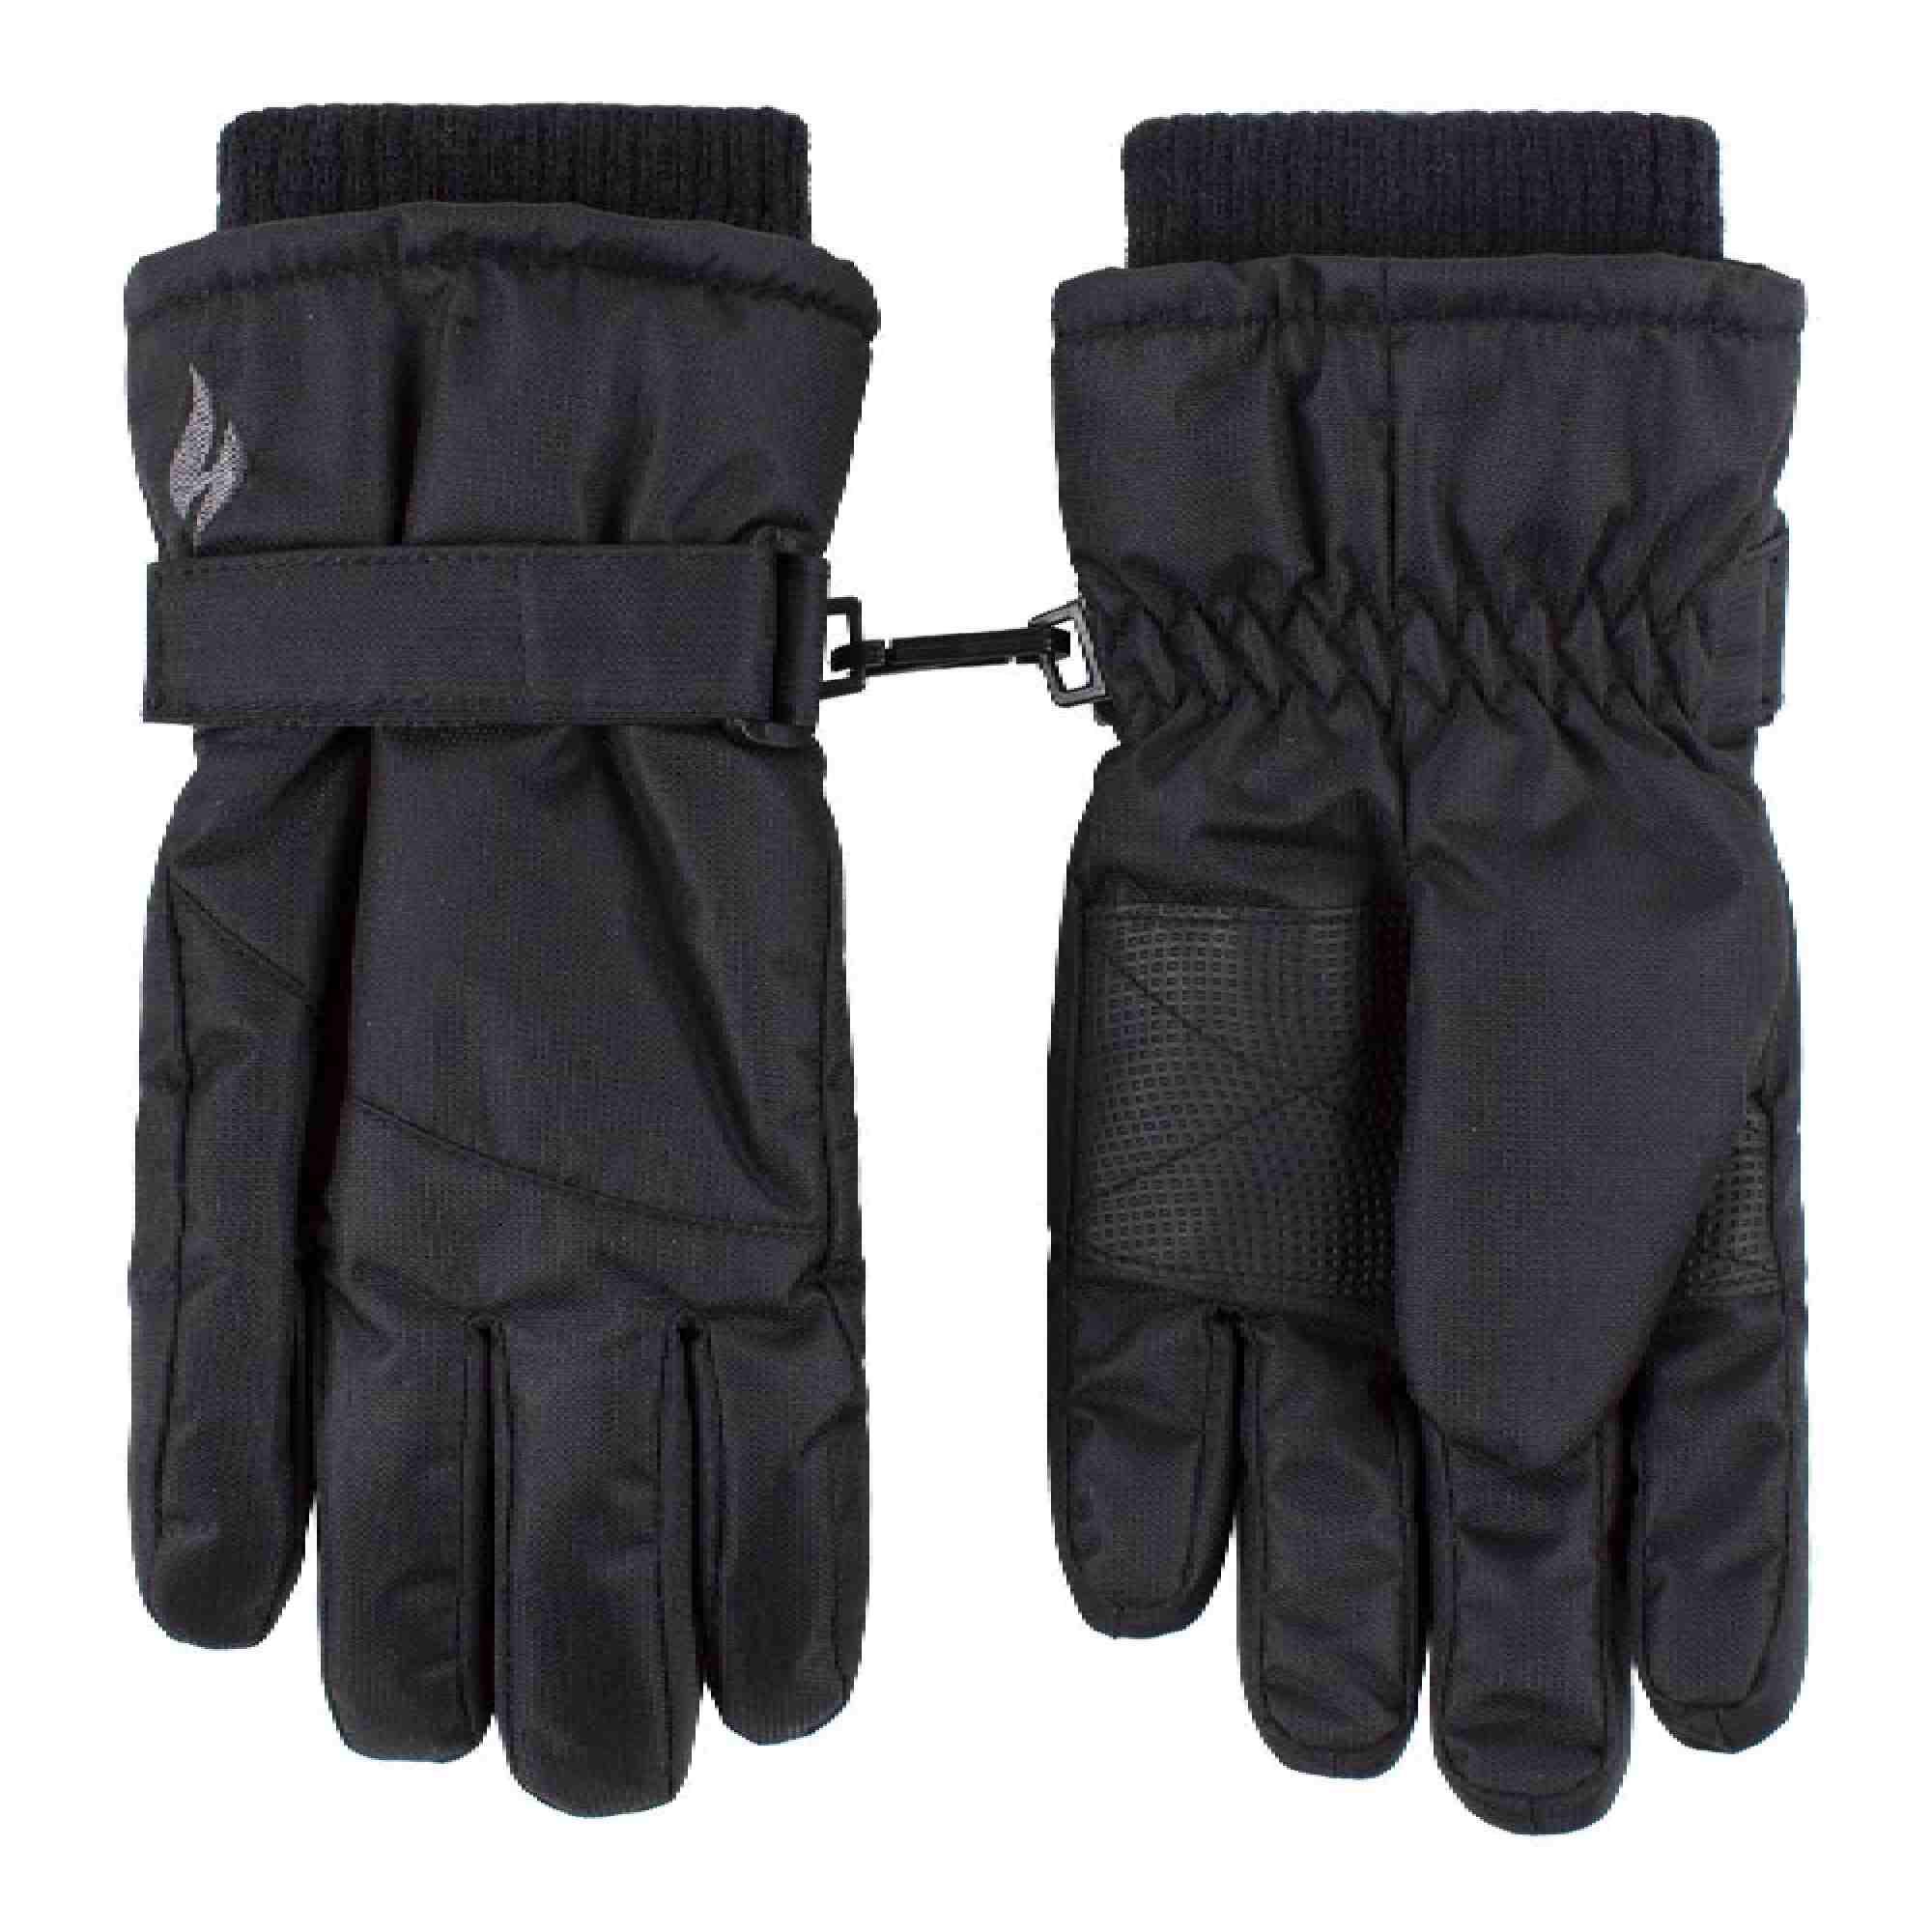 Childrens Black Winter Fleece Lined Waterproof Thermal Snow Ski Gloves 1/3